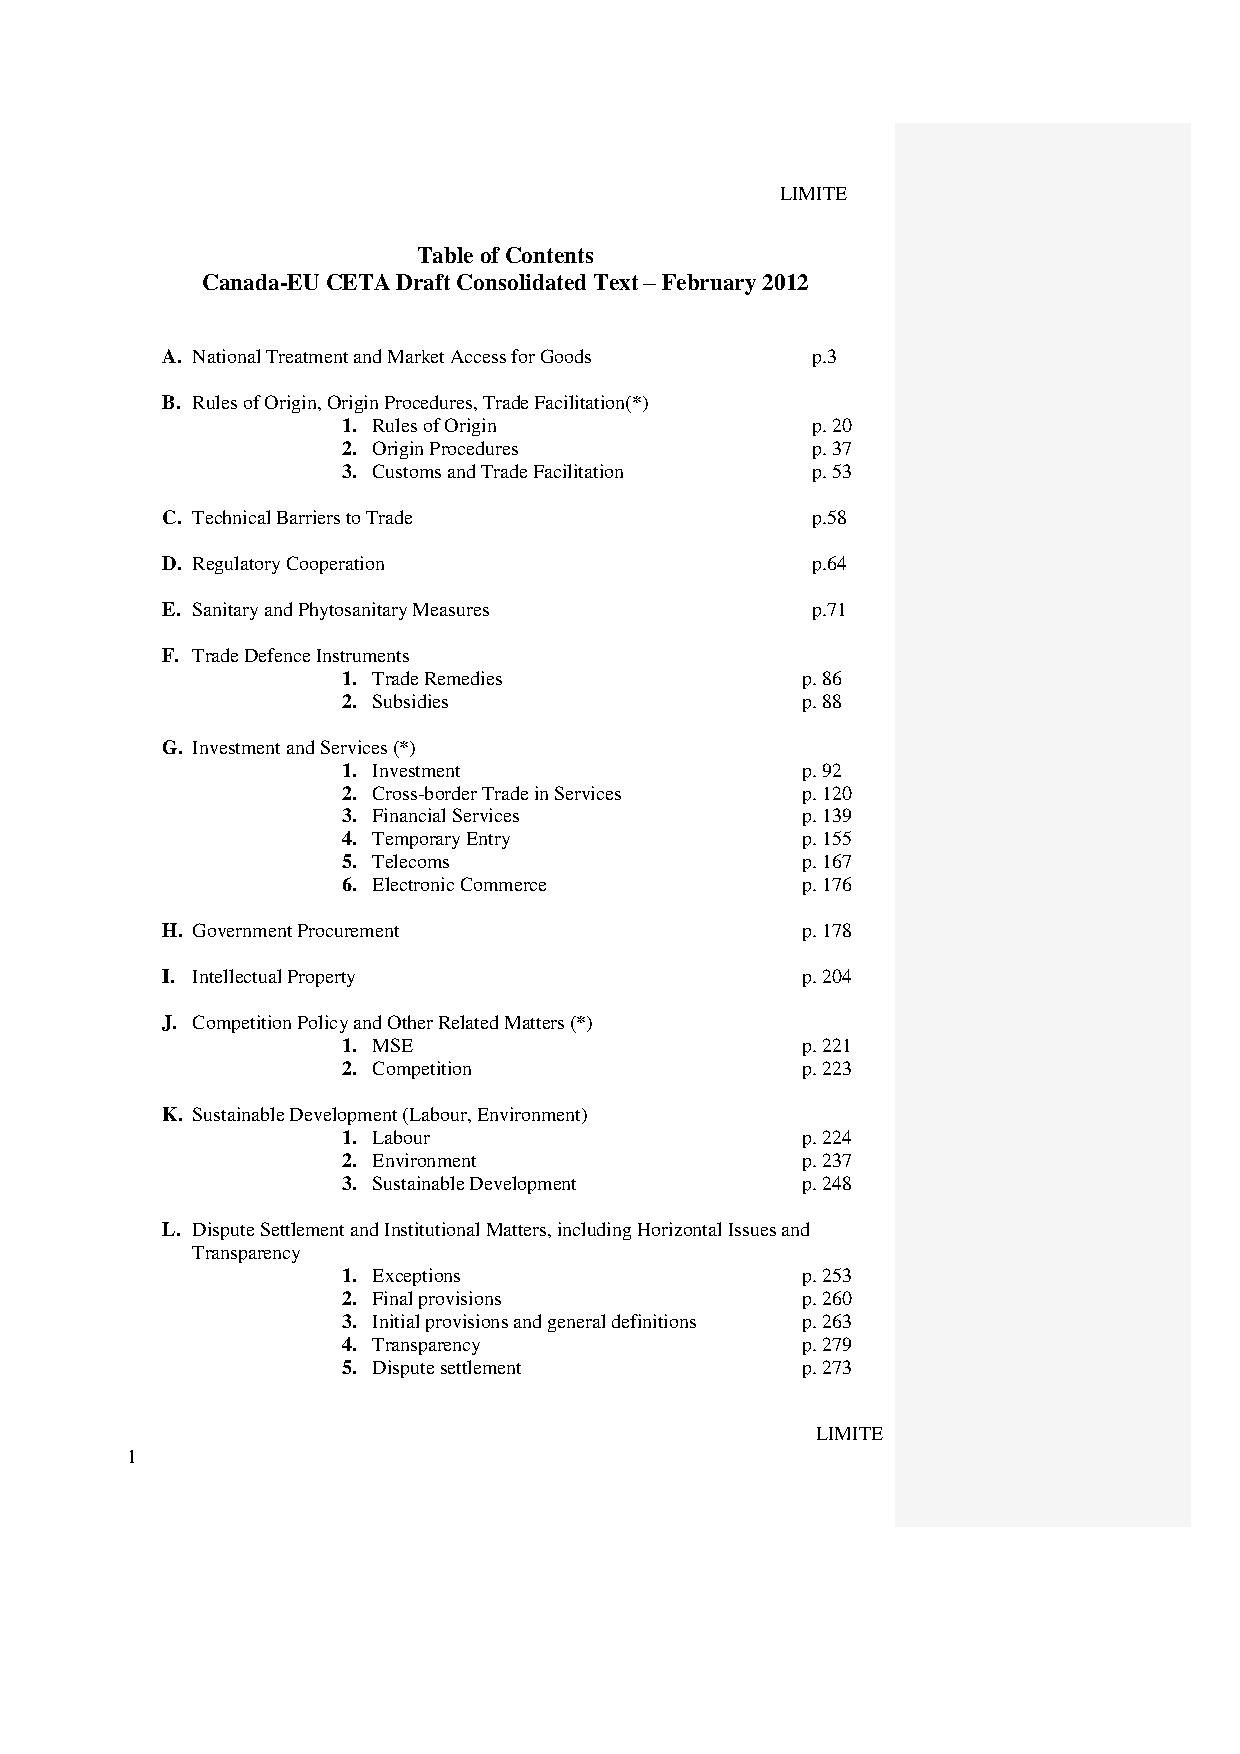 CETA-Draft Consolidated text-February 2012.pdf